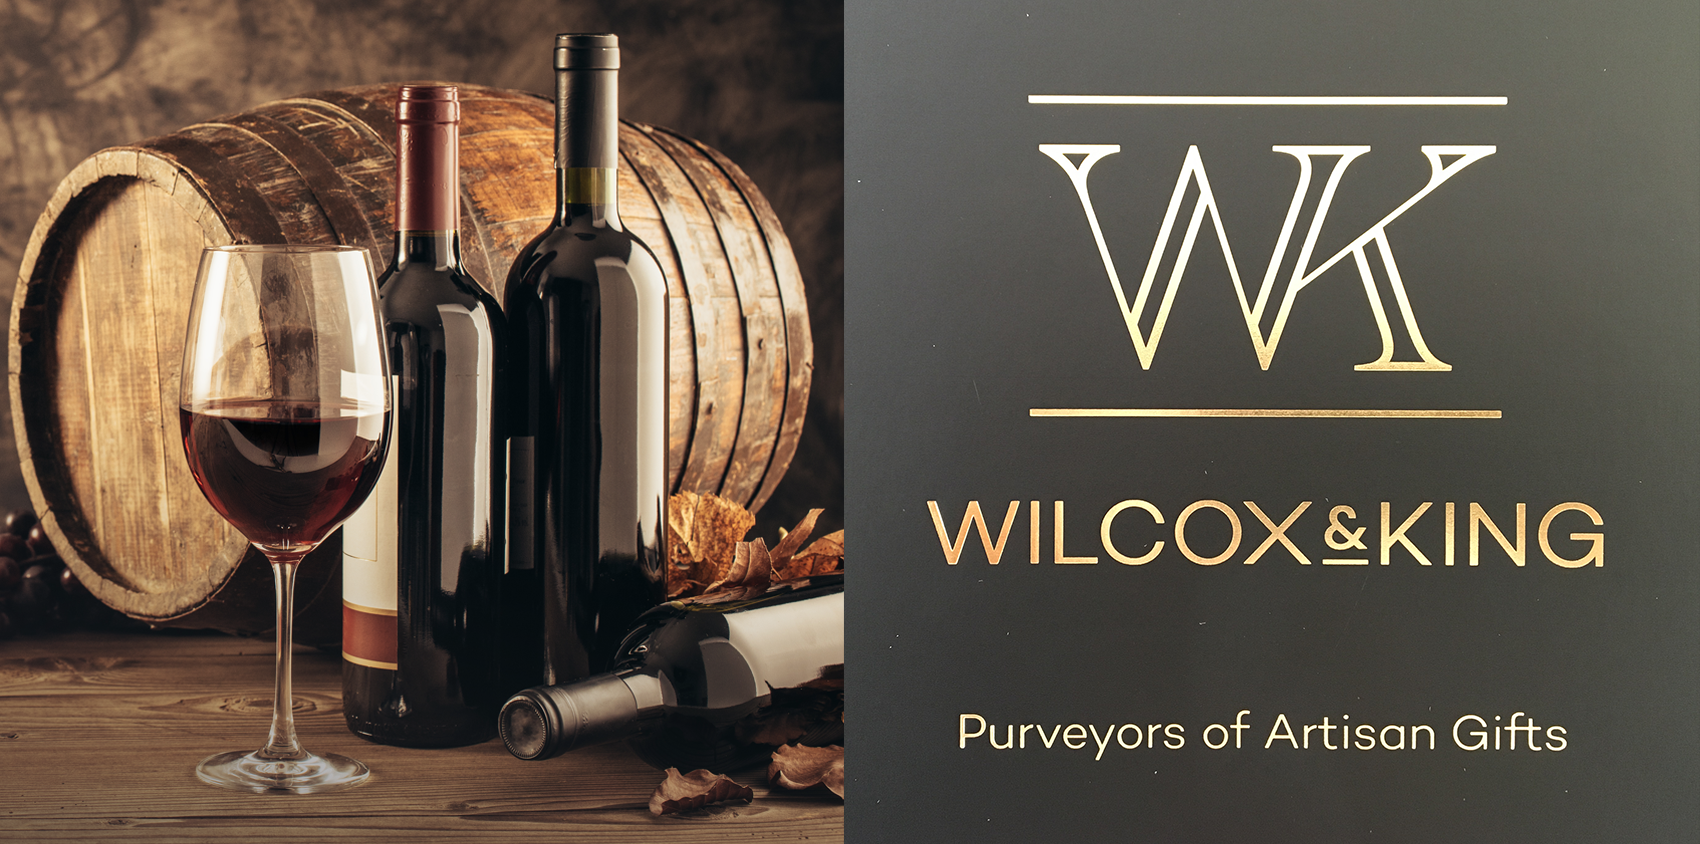 wilcox & king case study banner